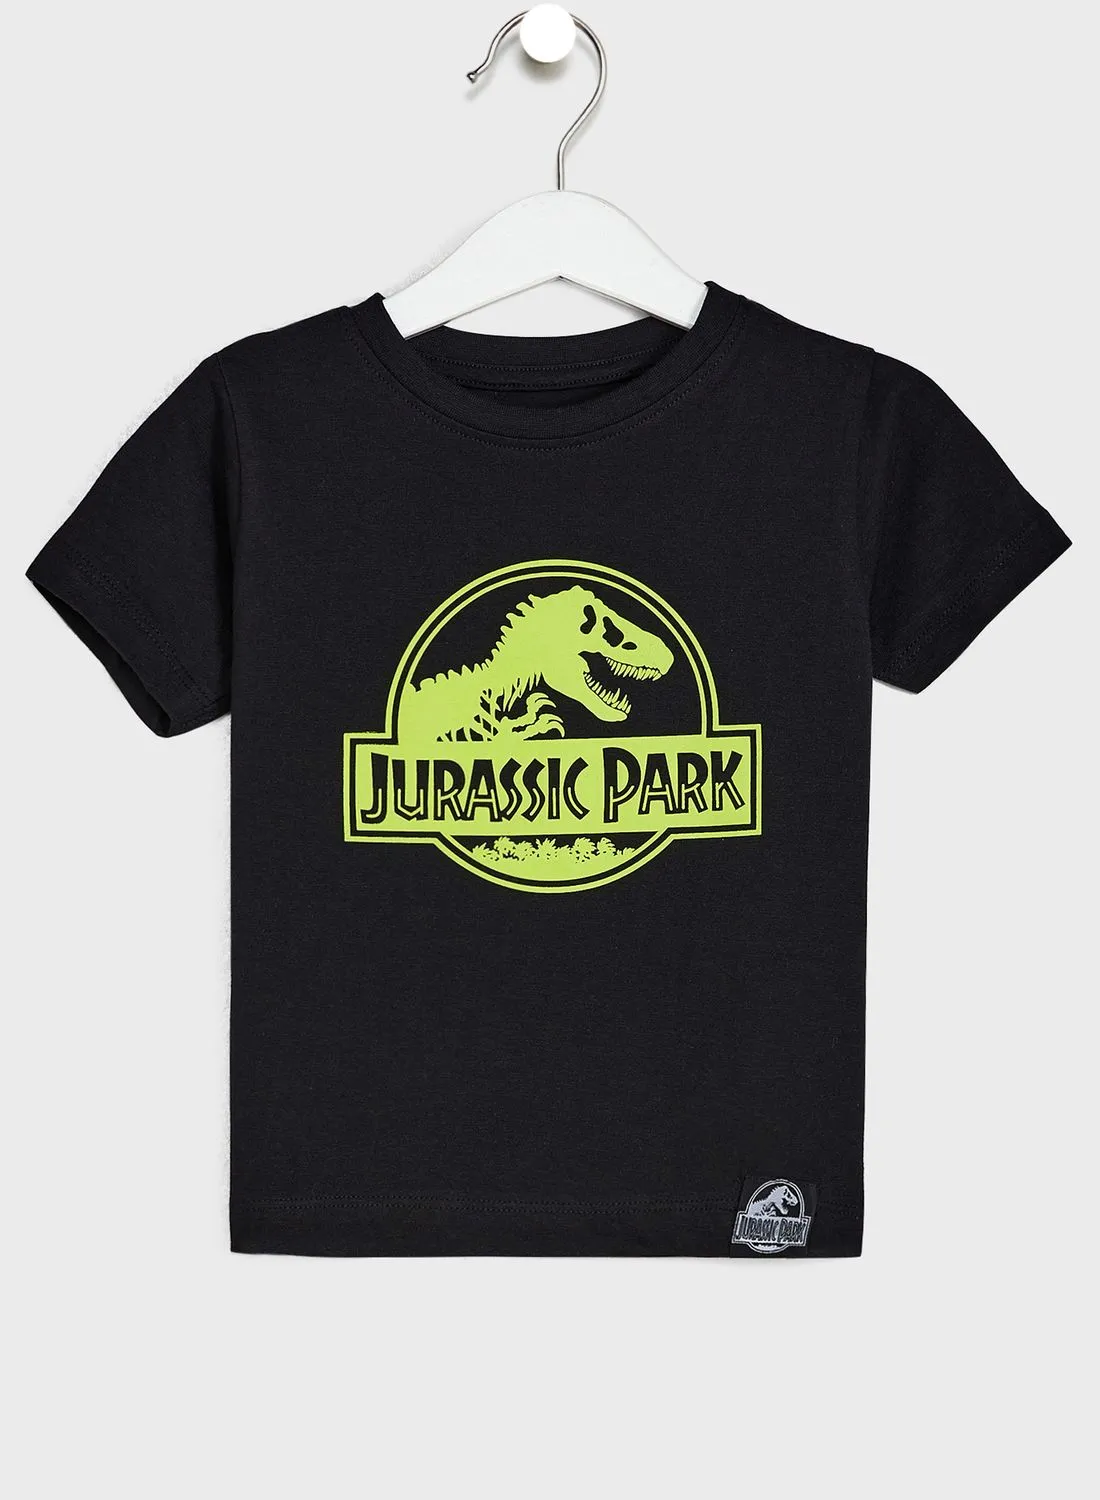 Jurassic Park Jurassic Park Toddler Boys T-Shirt